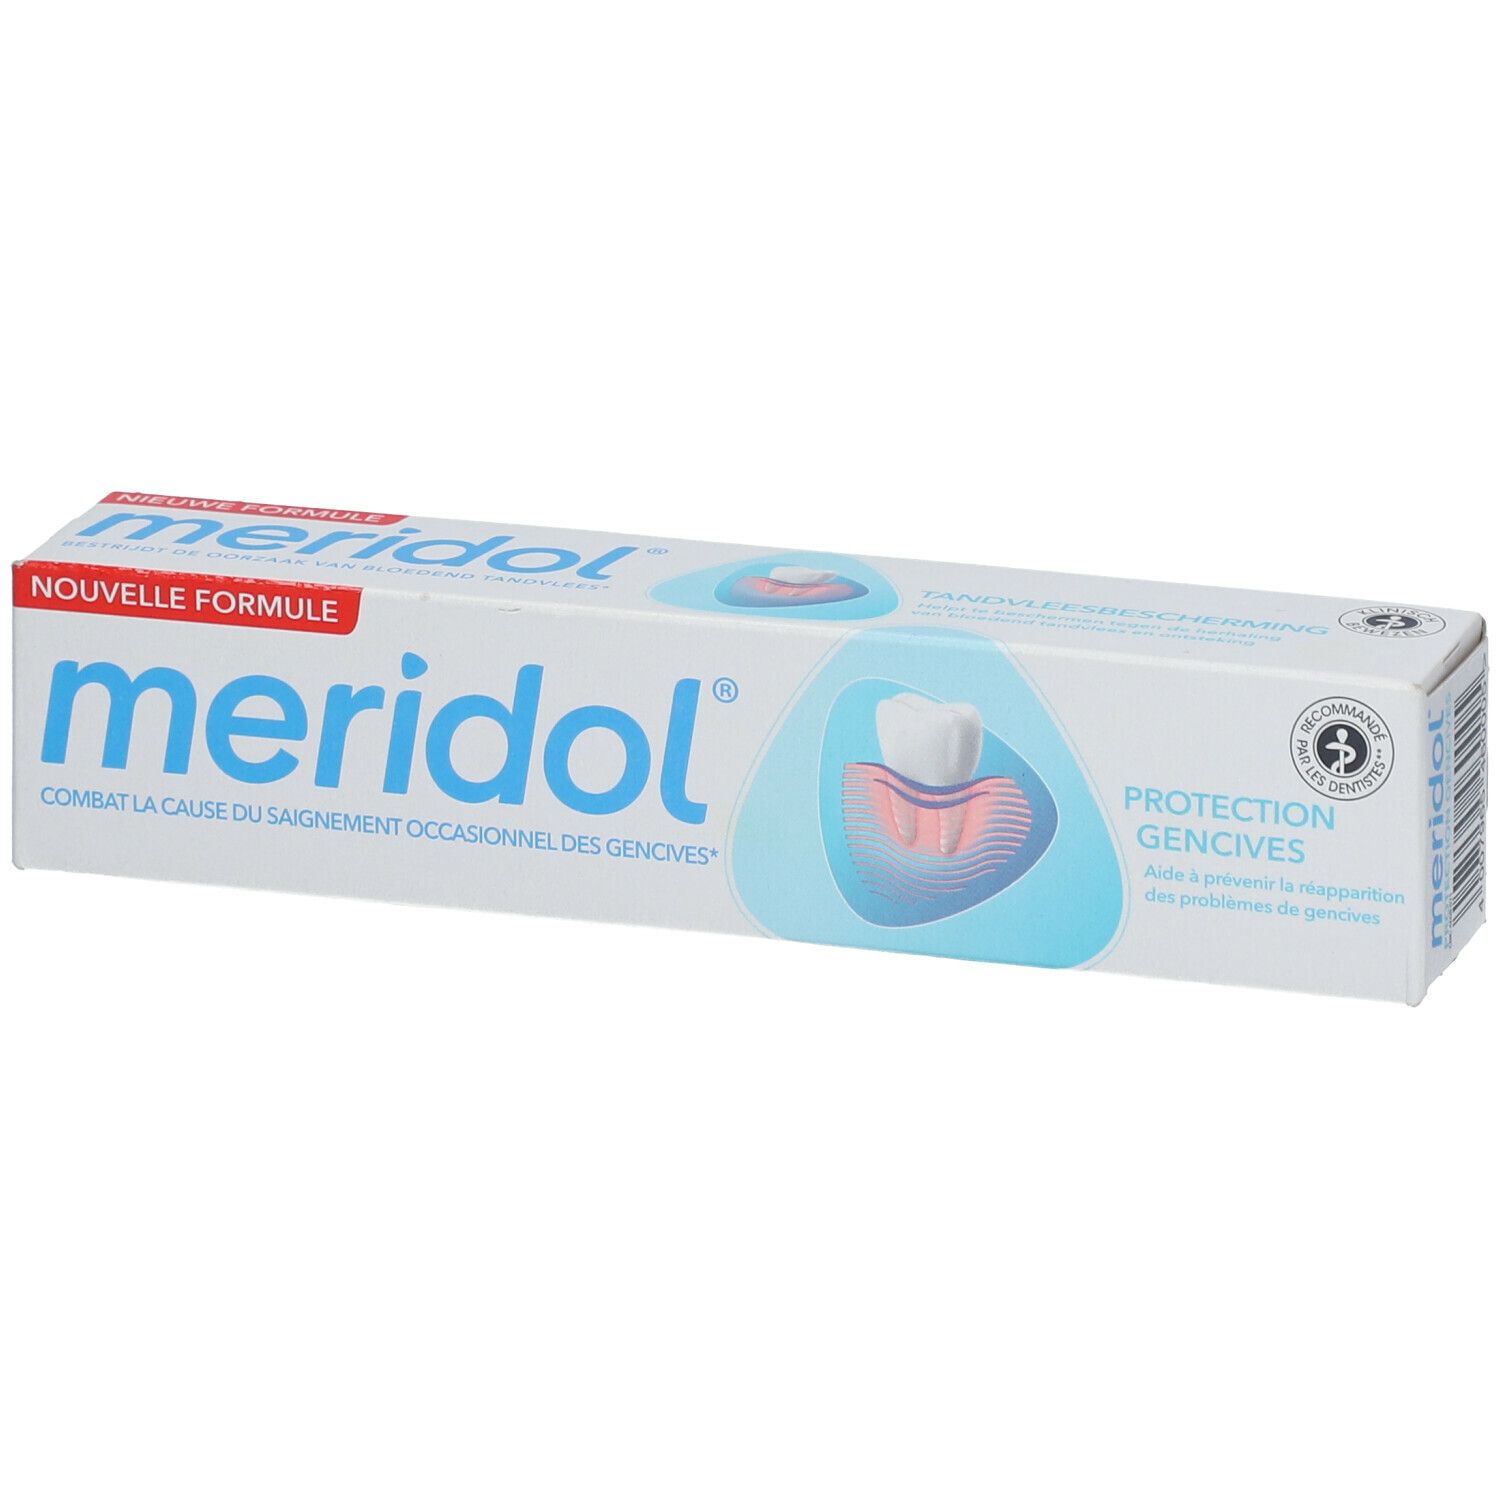 Meridol® Dentifrice Protection gencives